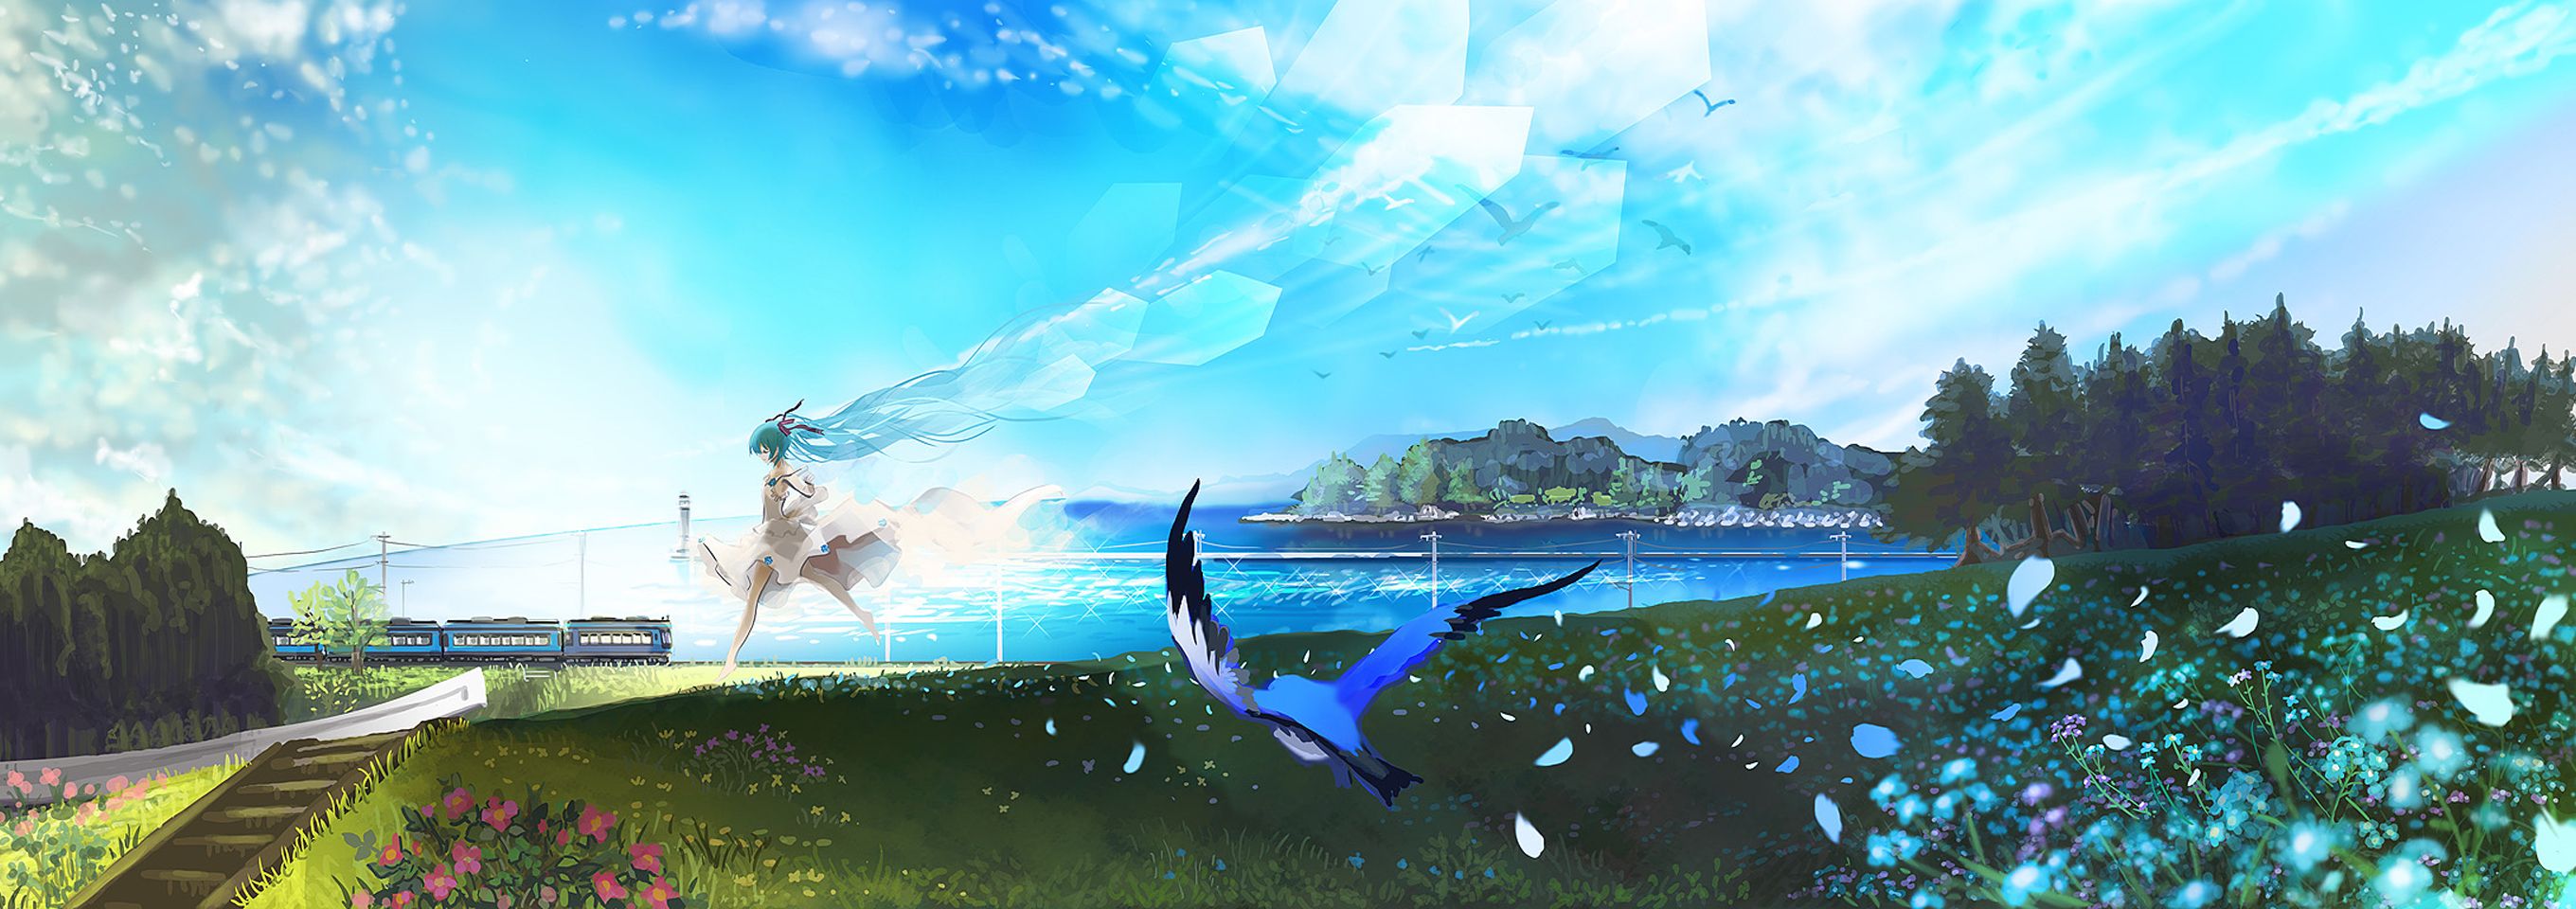 Free download Anime Landscape HD Wallpaper Part 2 DOWNLOAD Anime